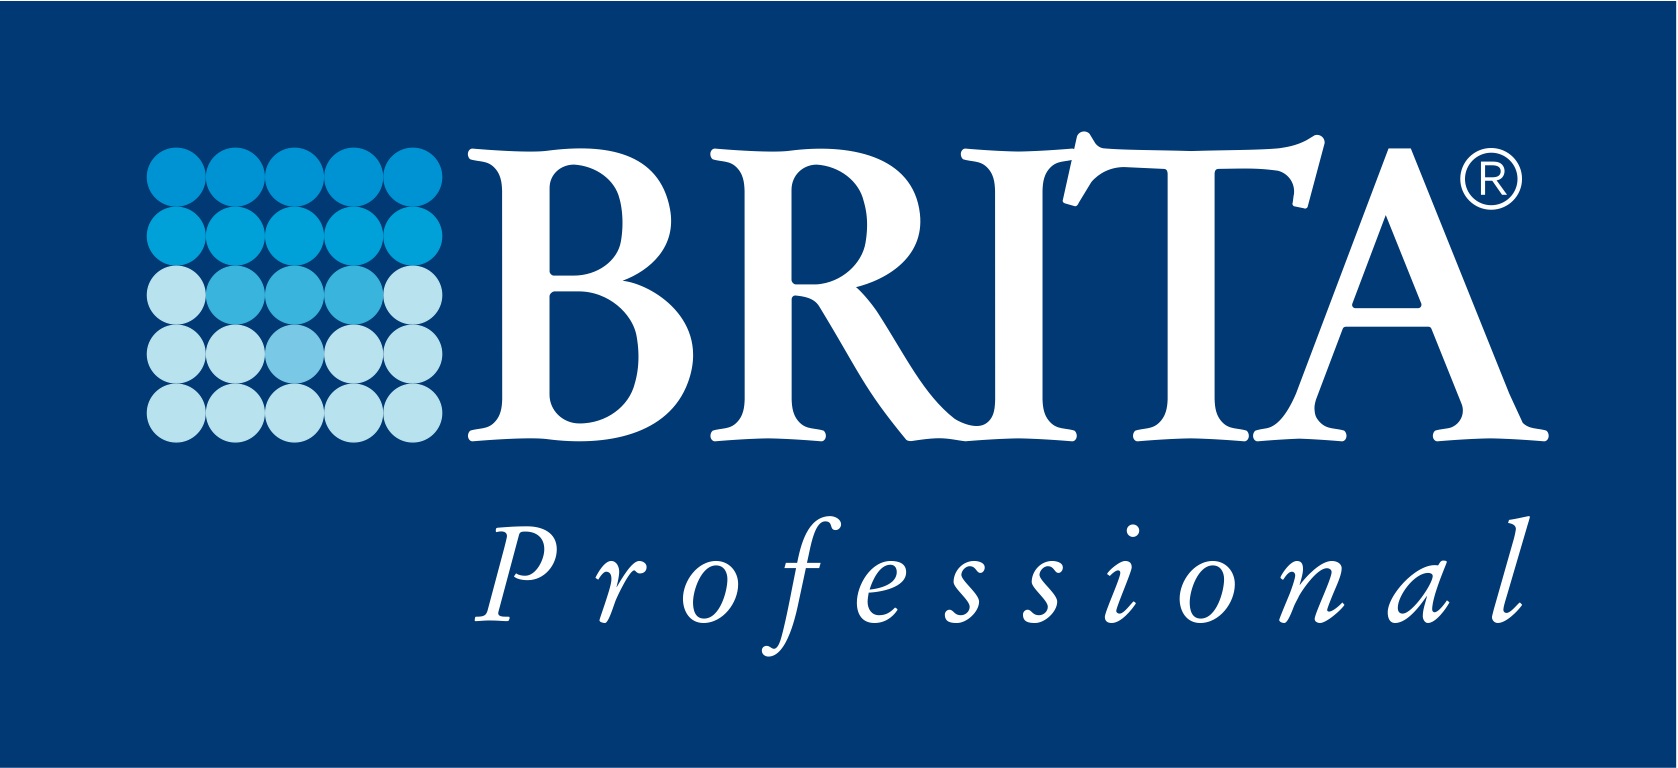 BRITA Rectangular logo1